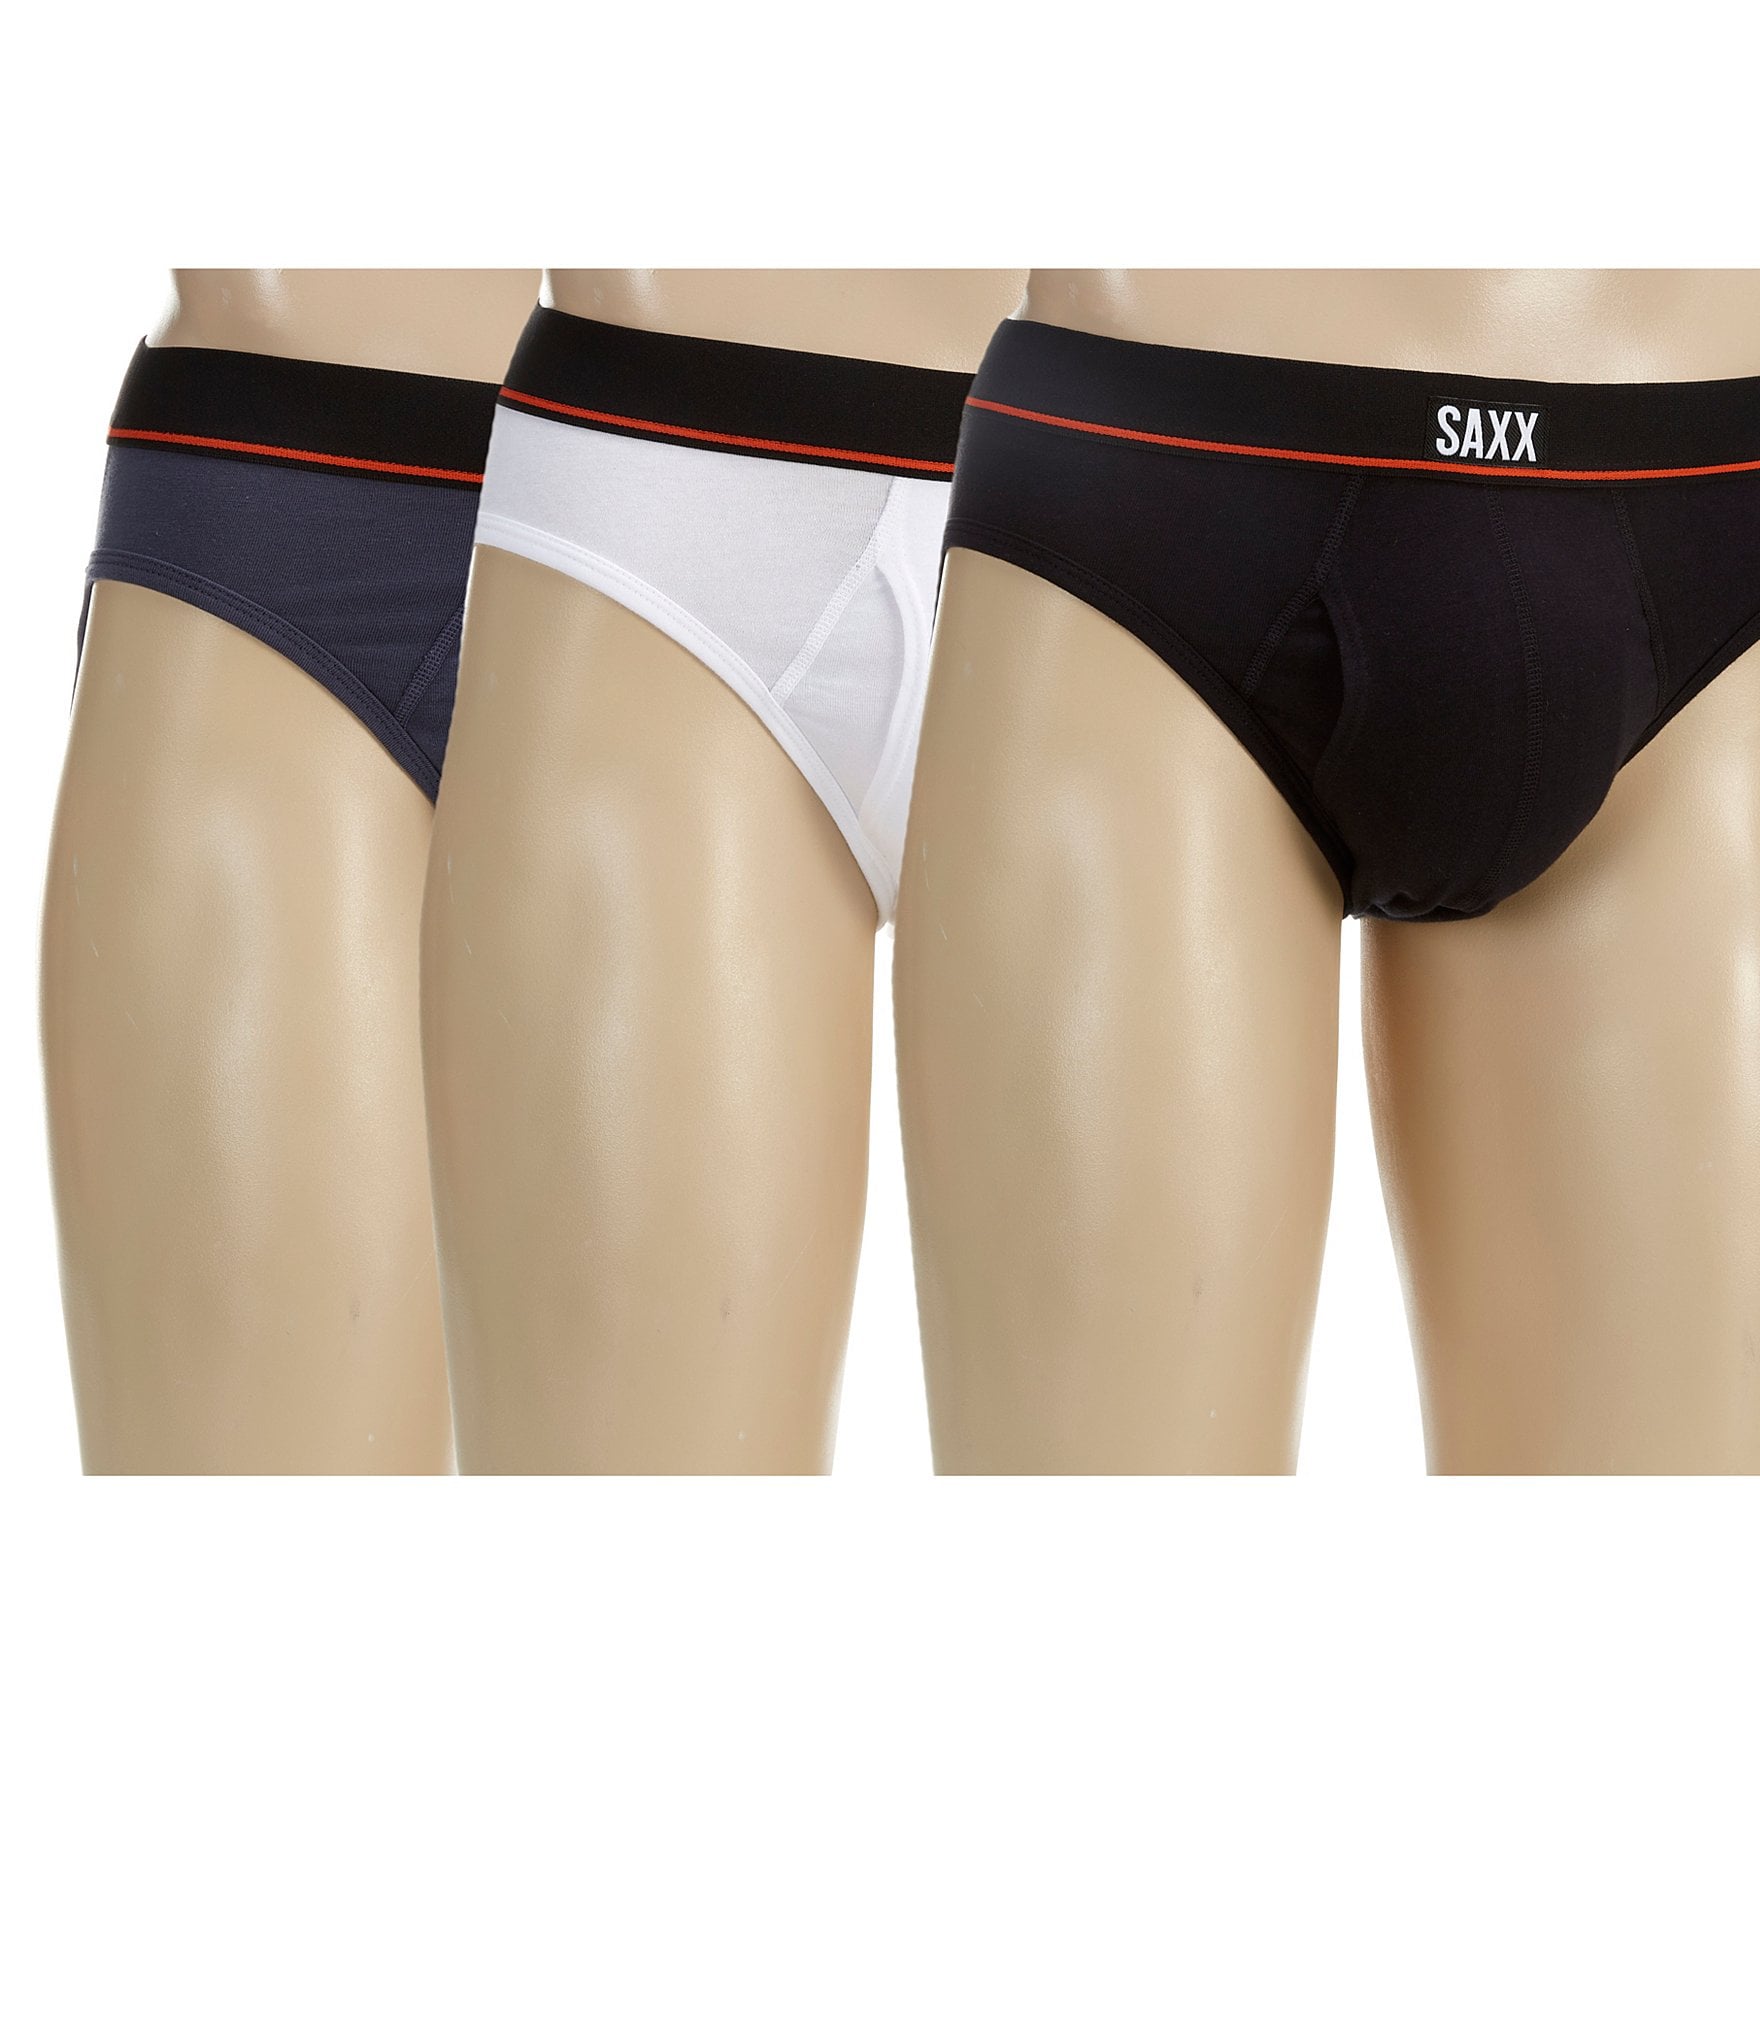 Saxx Men's Underwear - Non-Stop Stretch Cotton Trunk – Pack of 3